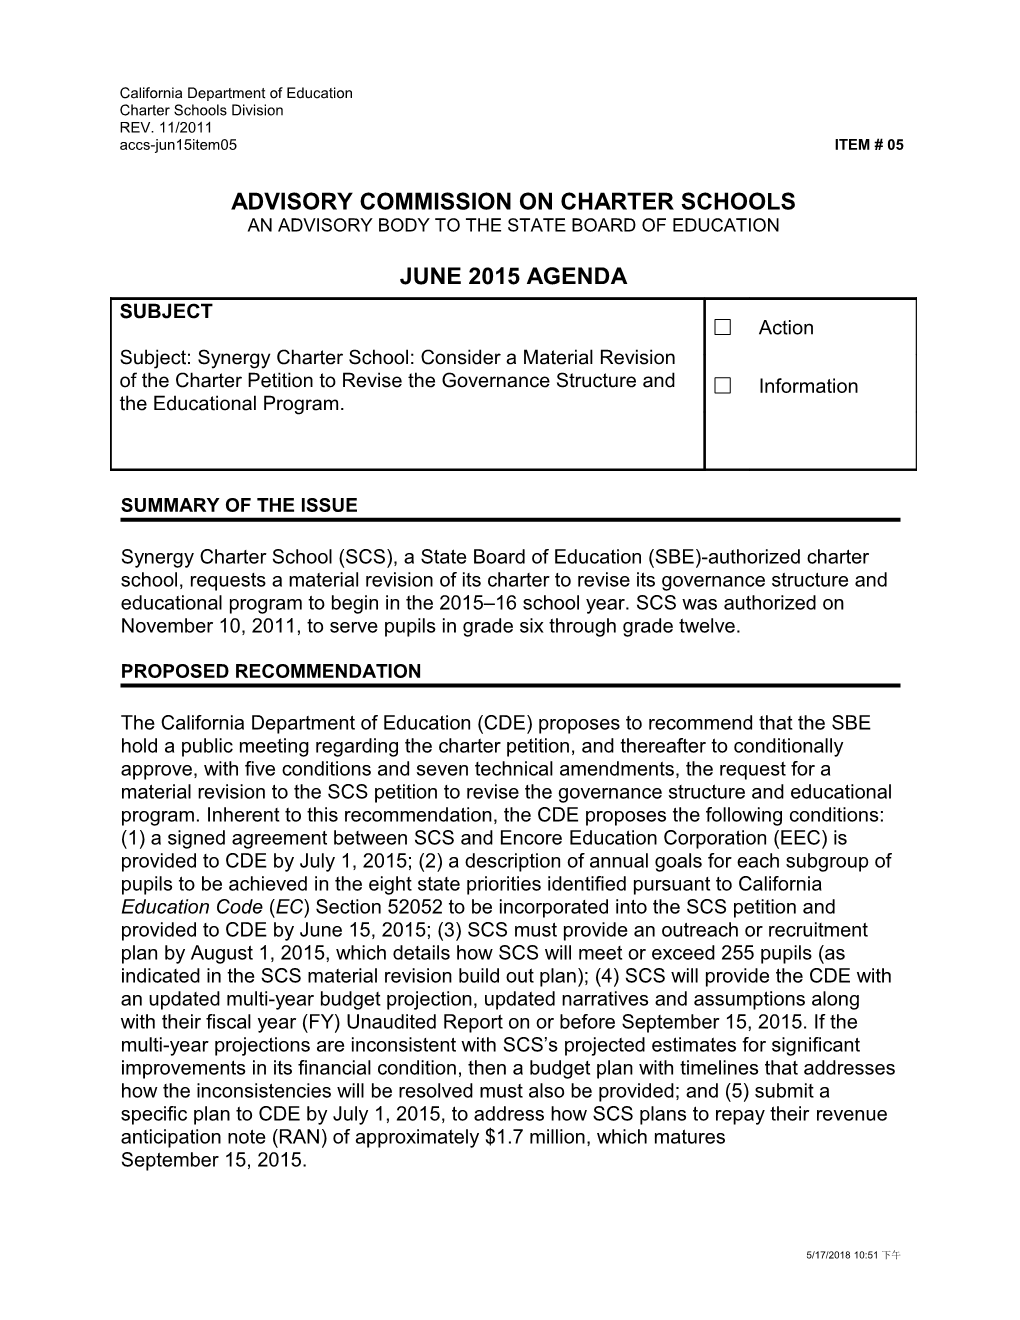 June 2015 ACCS Agenda Item 05 - Advisory Commission on Charter Schools (CA State Board